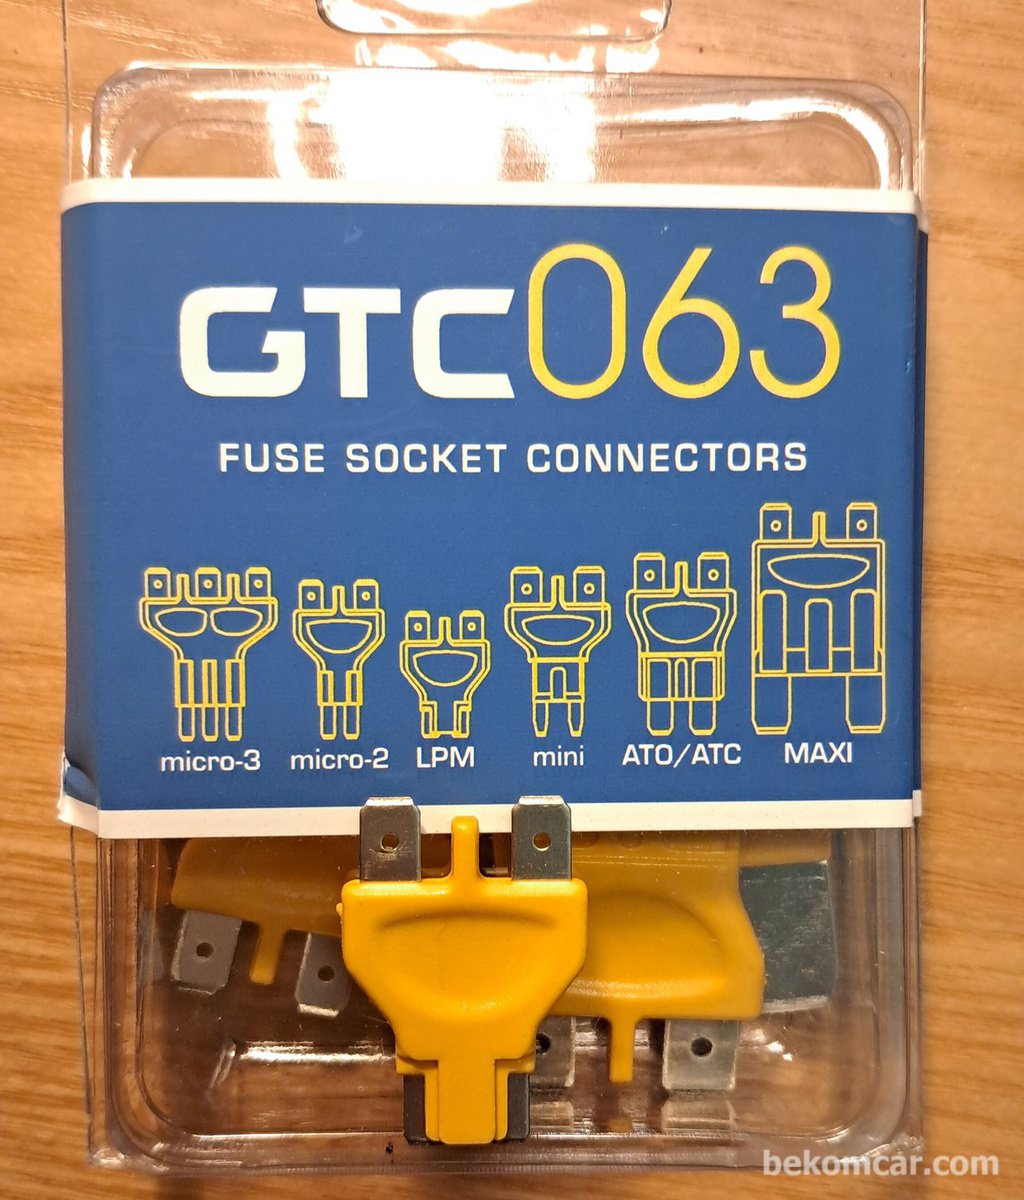 GTC063 Fuse Socket Connector Kit by GTC, General Technologies Corp|贝科姆汽车 (bekomcar)